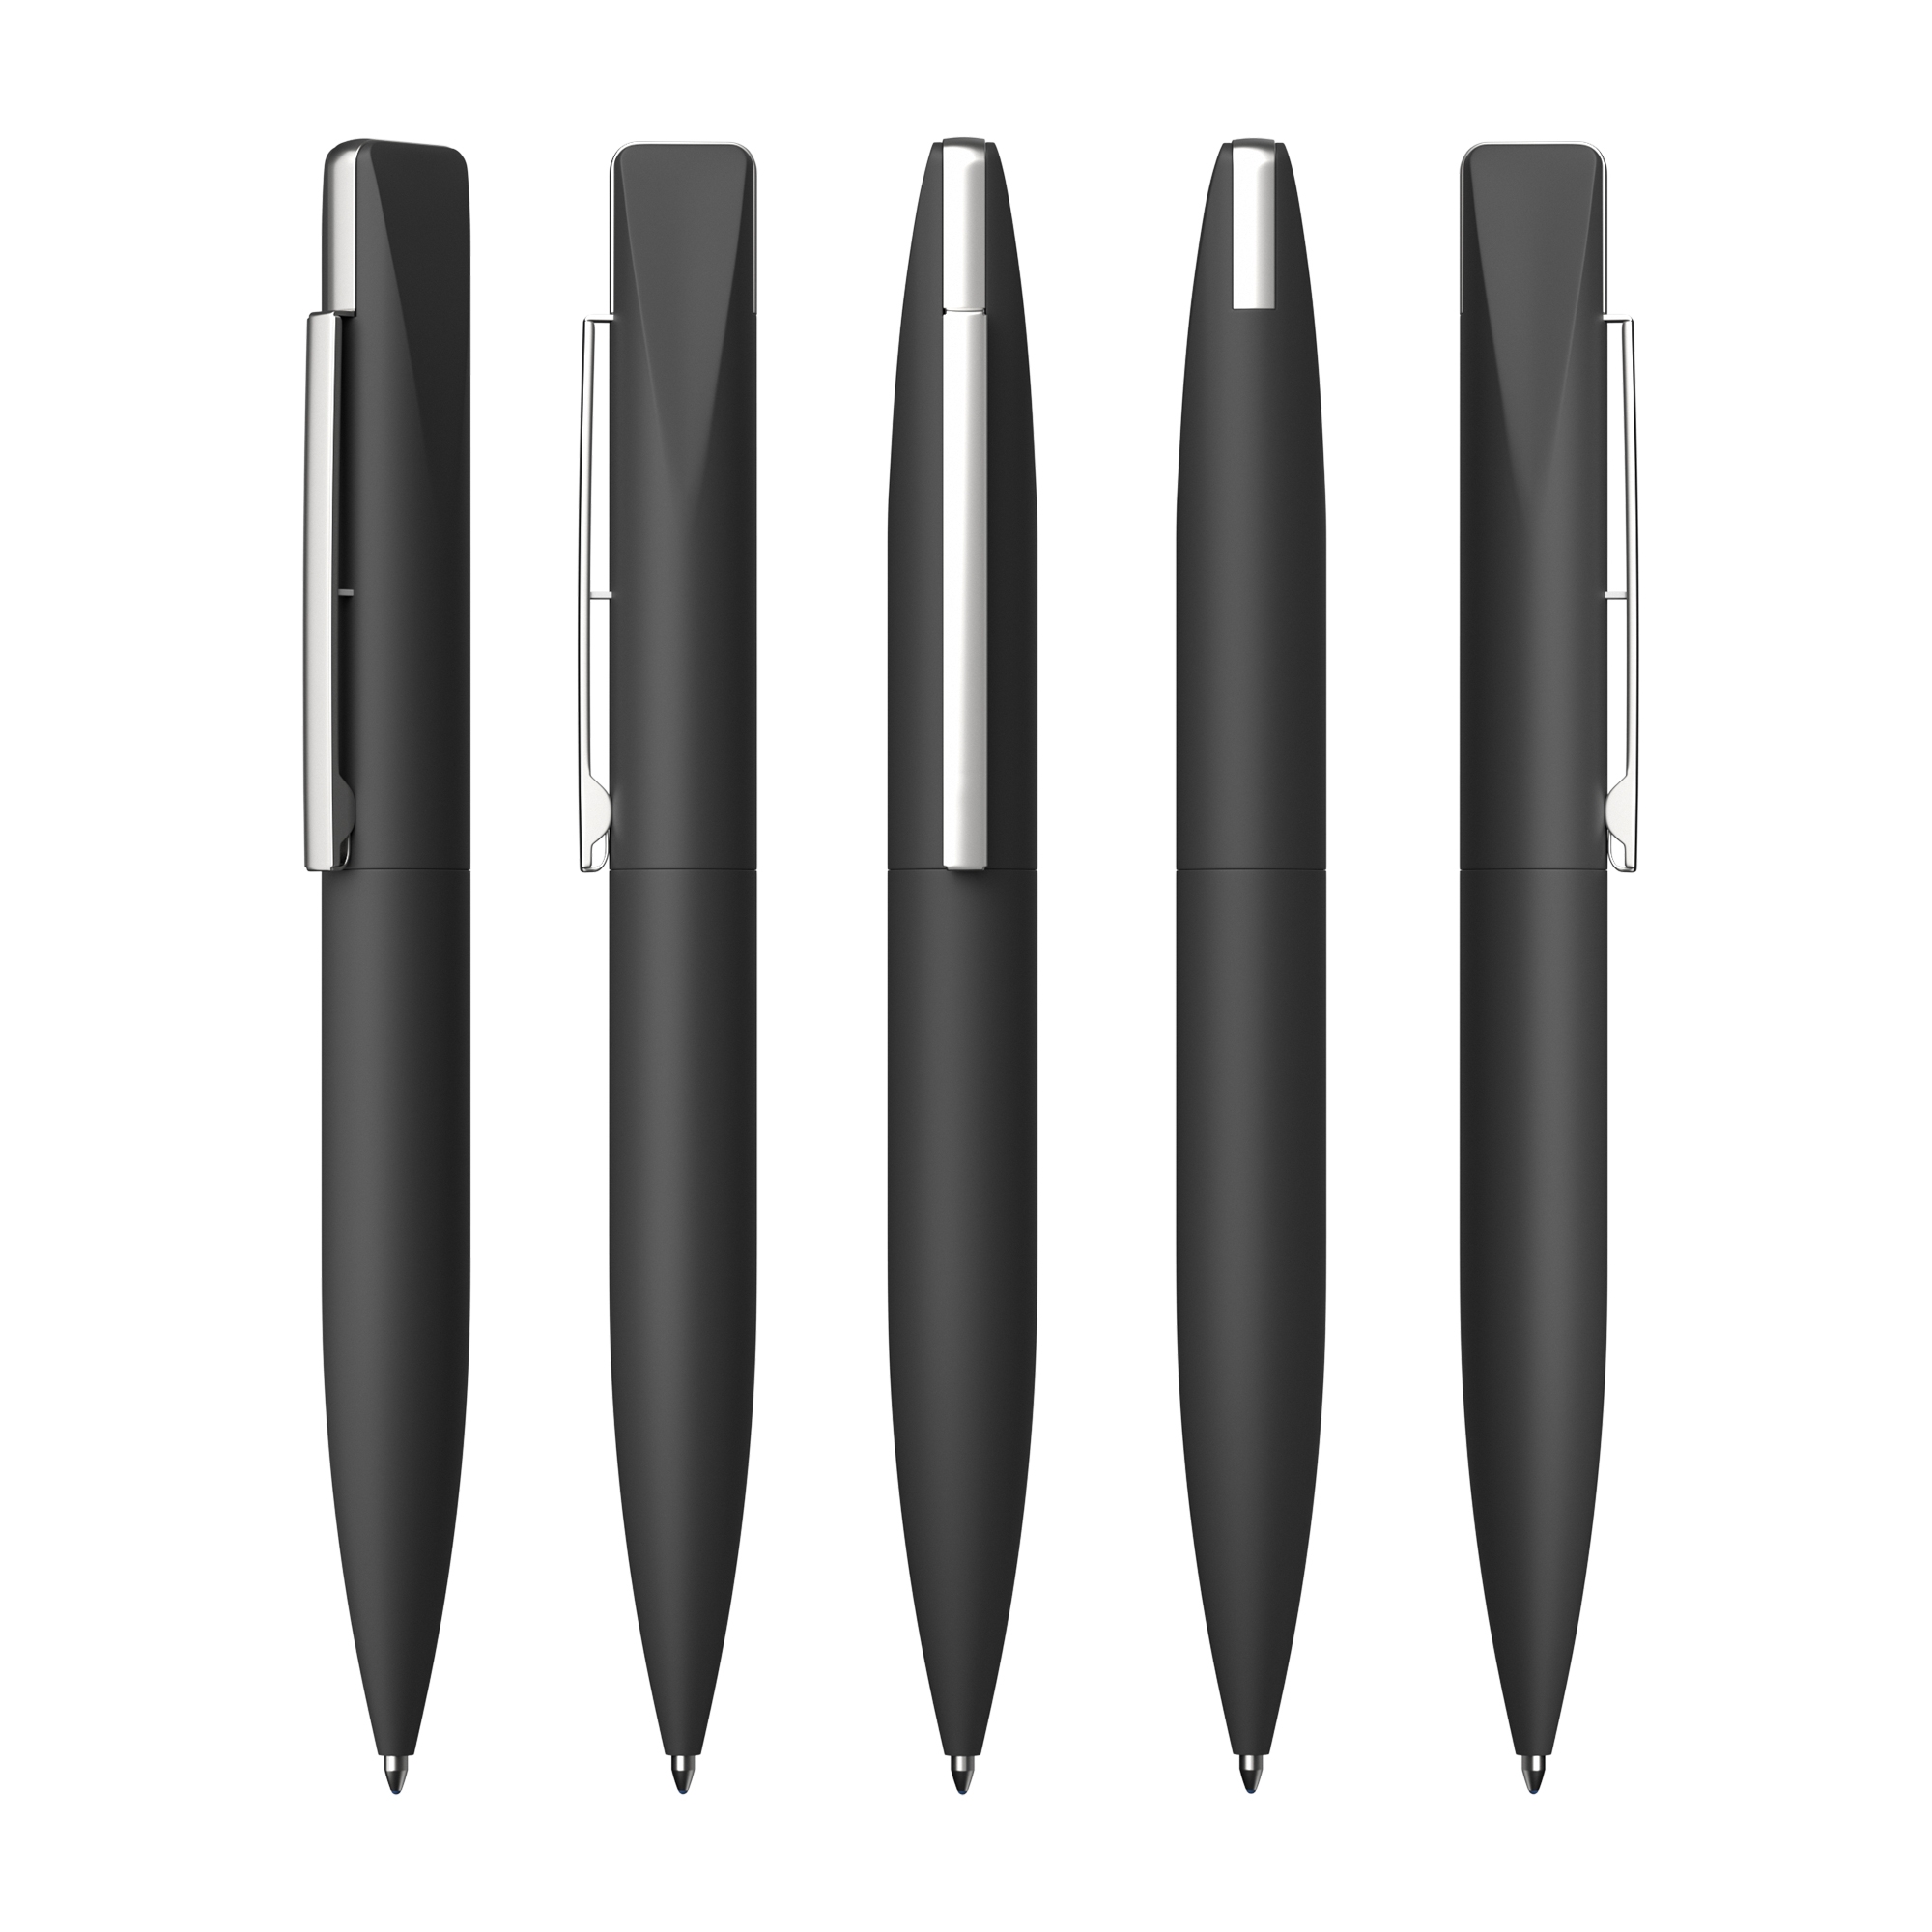 Ручка шариковая "Callisto" с флеш-картой 32Gb, покрытие soft touch, черный, металл/пластик/soft touch